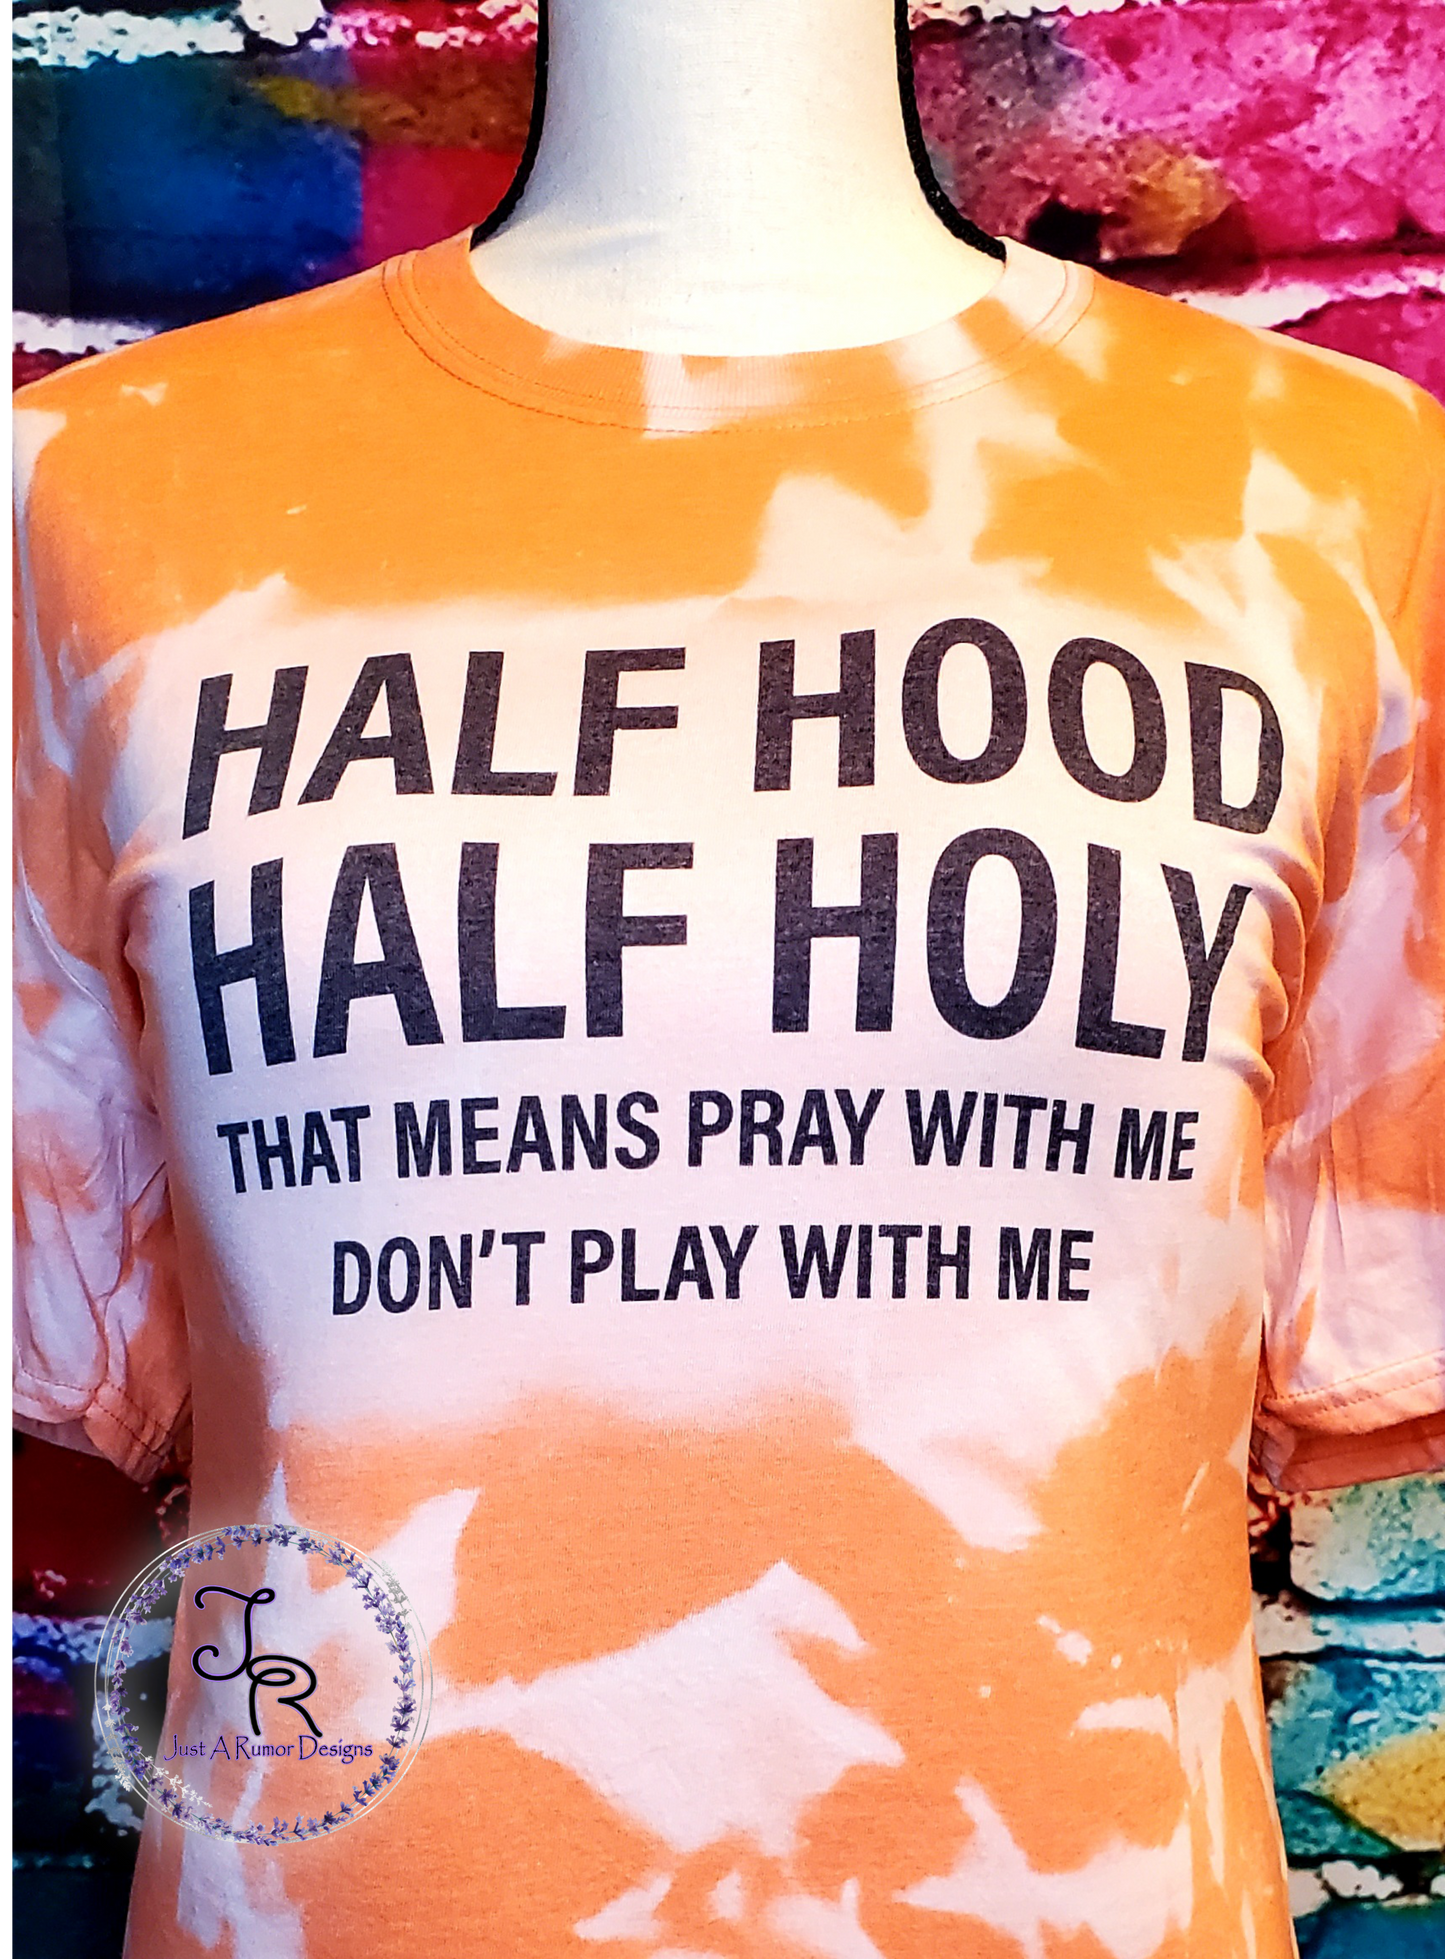 Hood & Holy Shirt